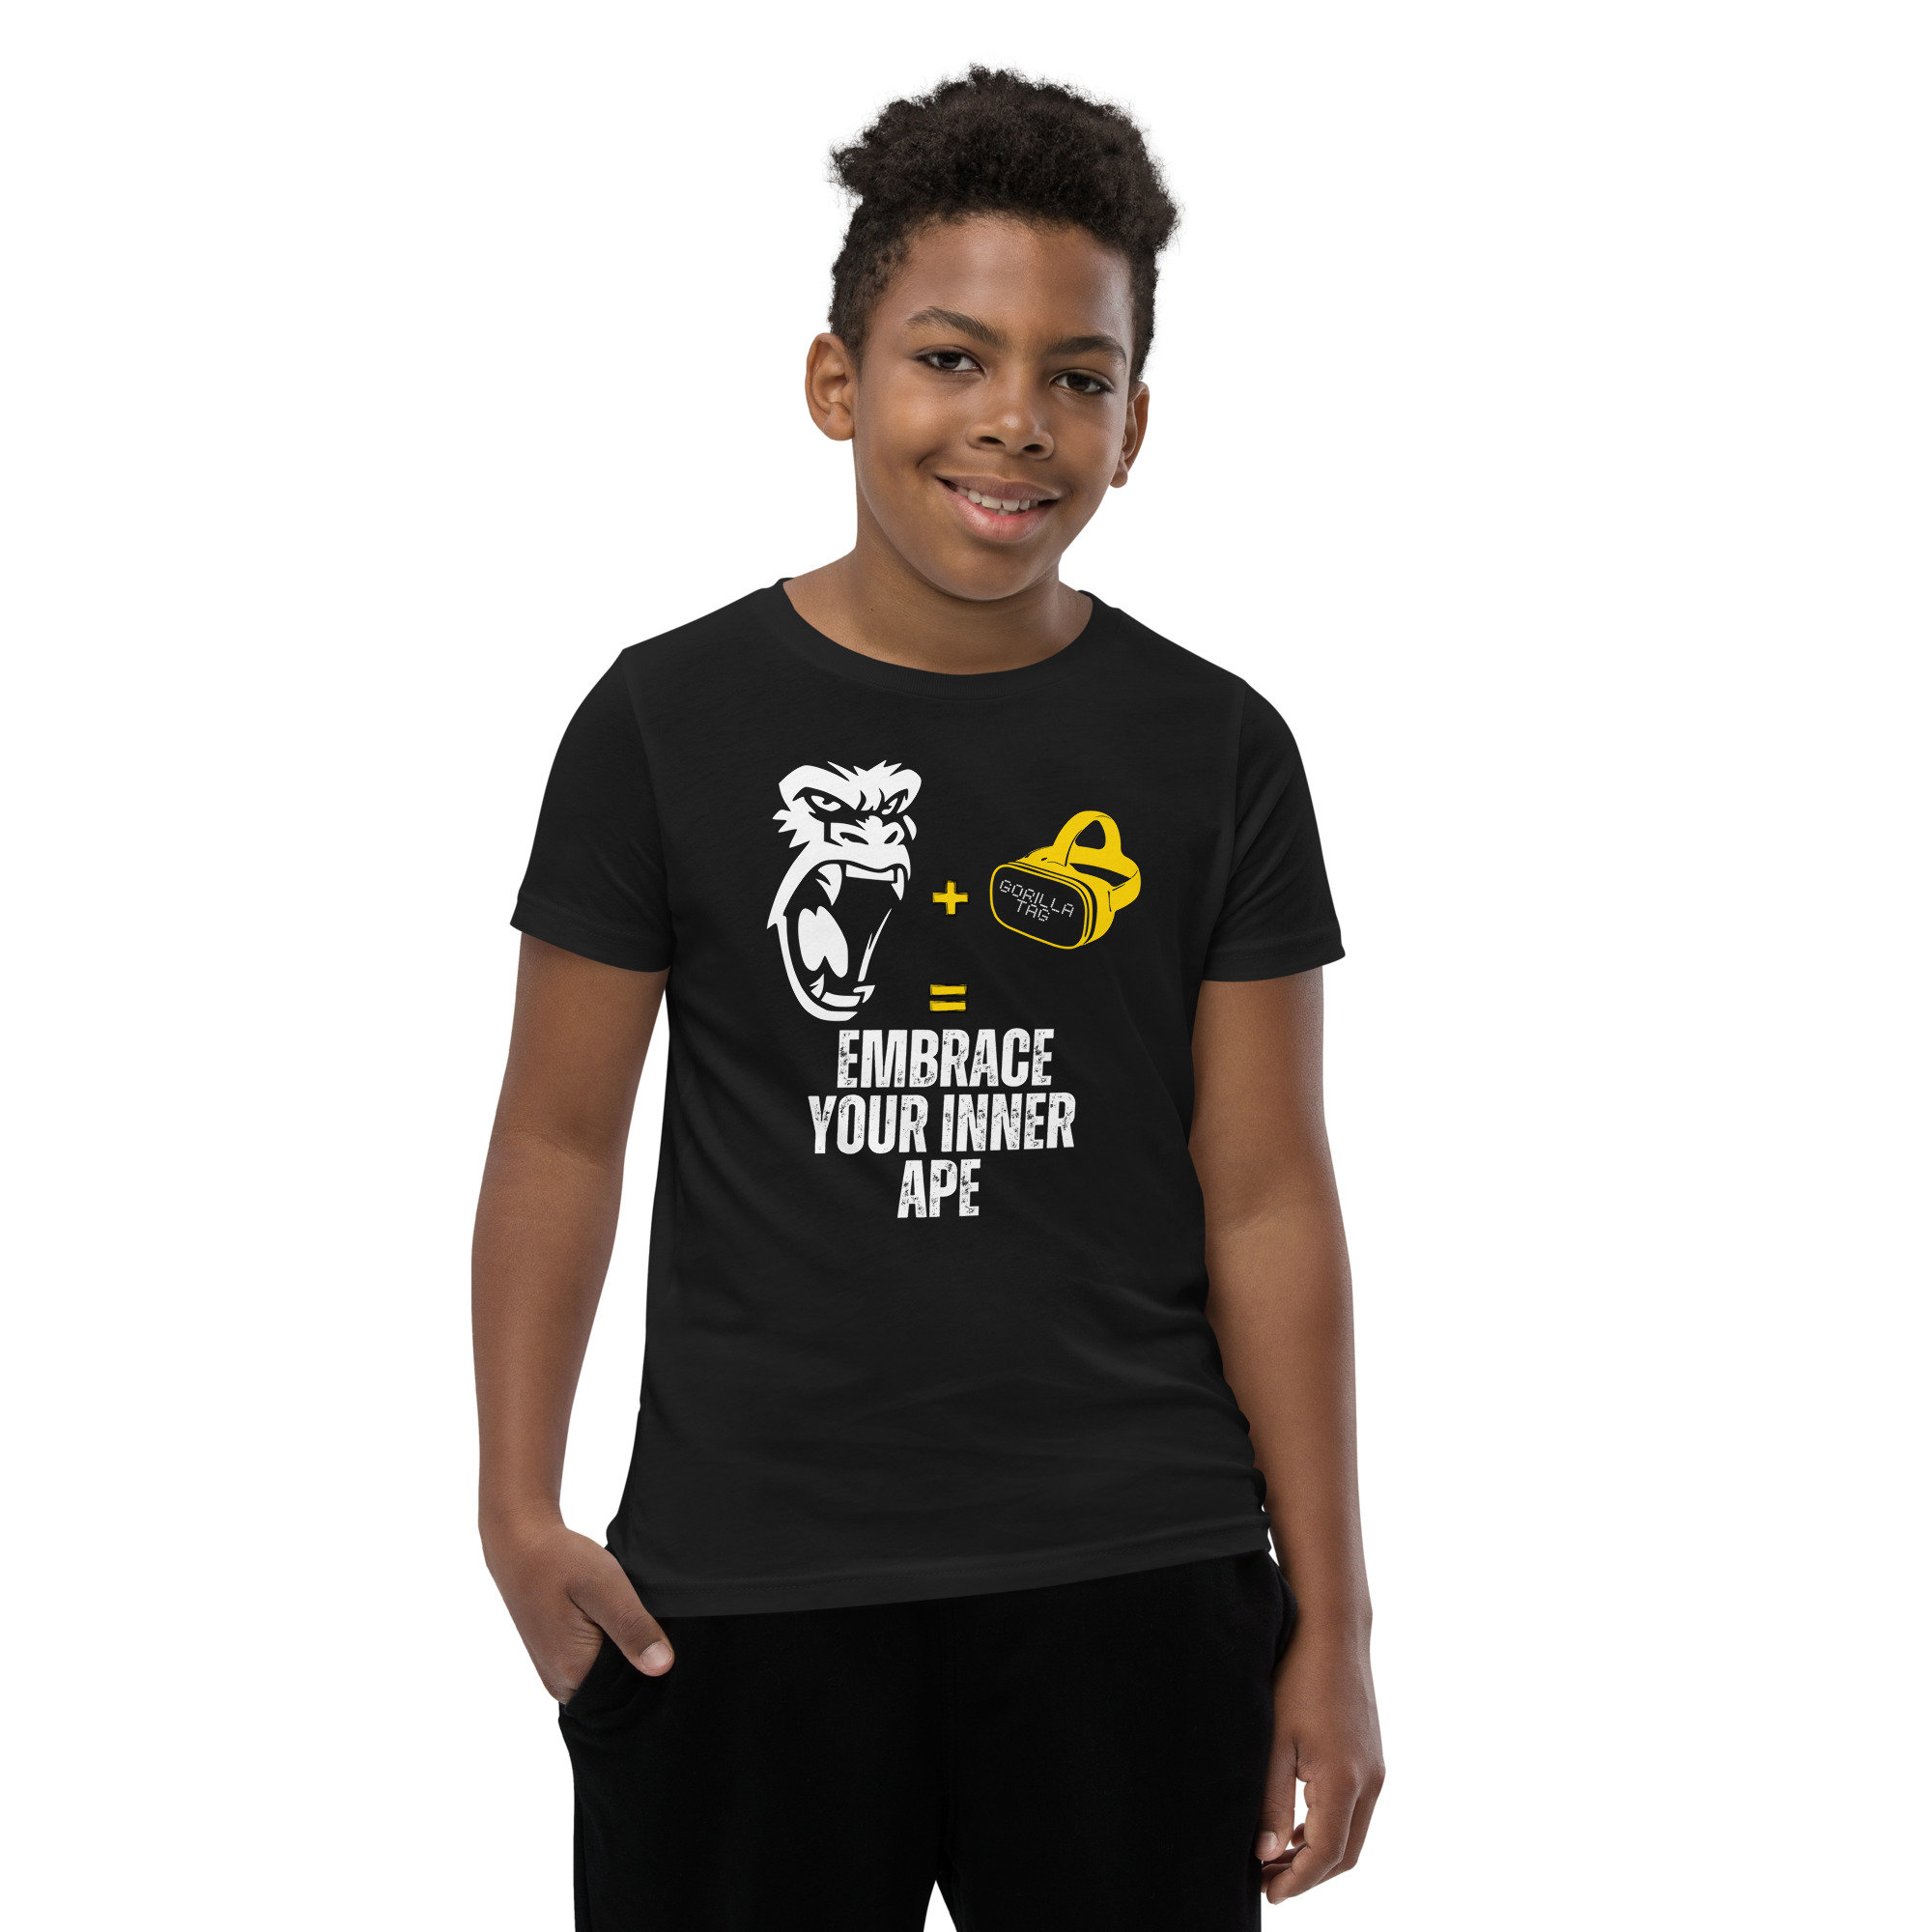 Retro gorilla tag shirt, gorilla tag merch monke boys gifts - Inspire Uplift